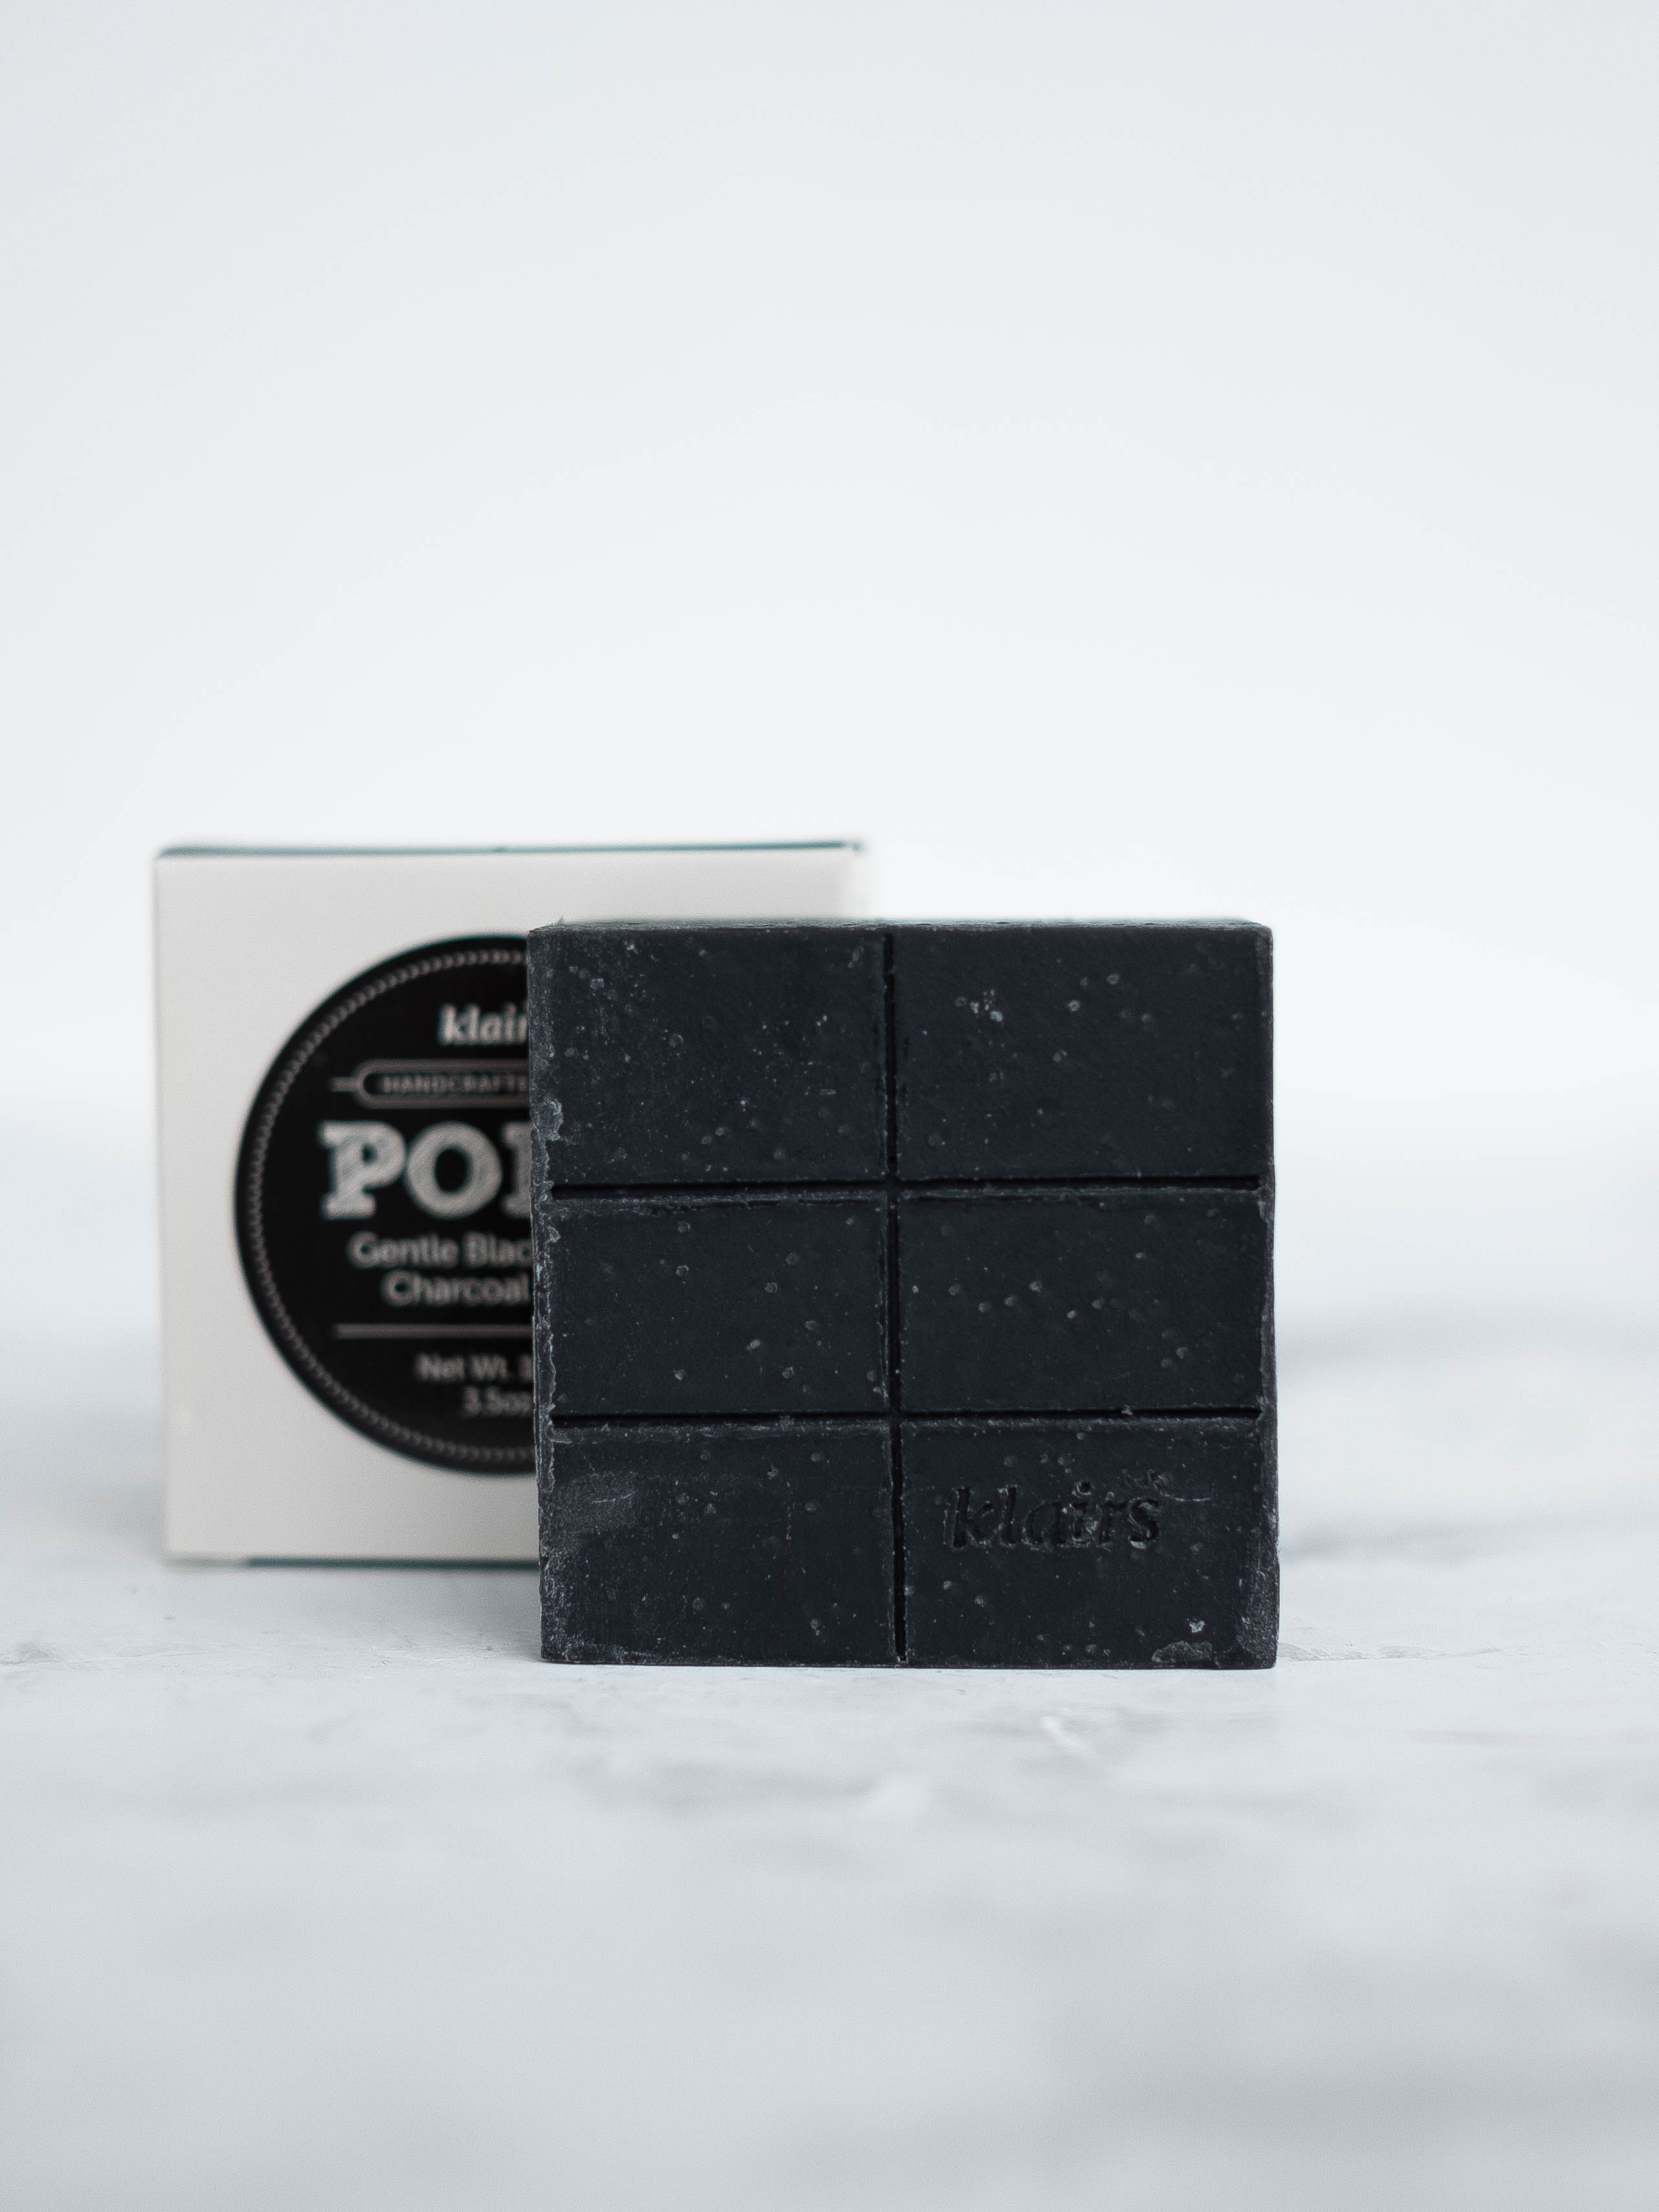 Мыло черное для ухода за порами KLAIRS Gentle Black Sugar Charcoal Soap 100g - фото 1